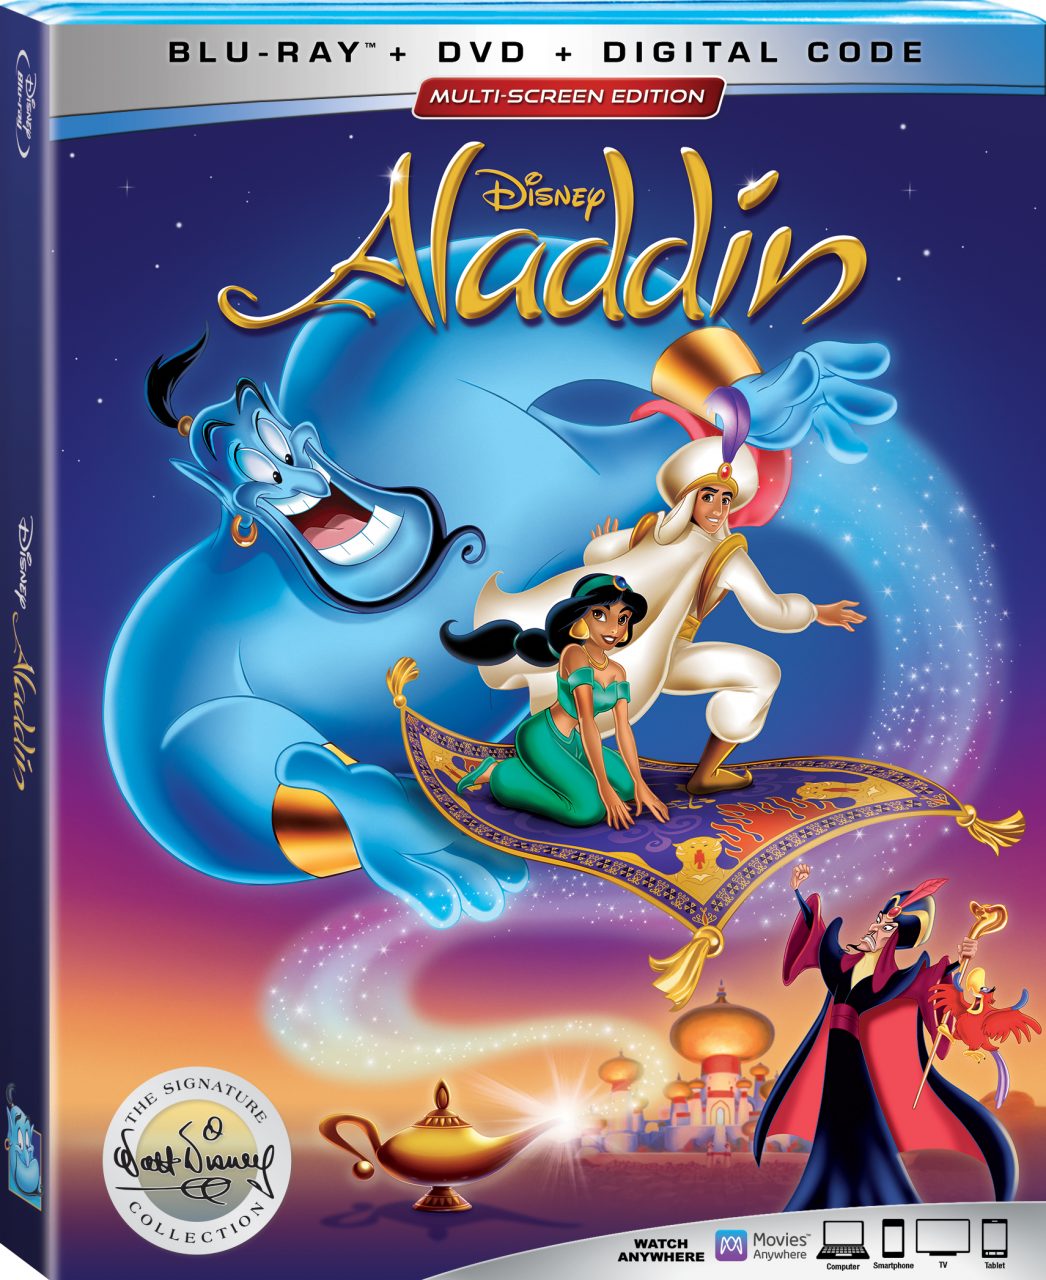 Aladdin Walt Disney Signature Collection Blu-Ray Combo Pack cover (Walt Disney Studios Home Entertainment)